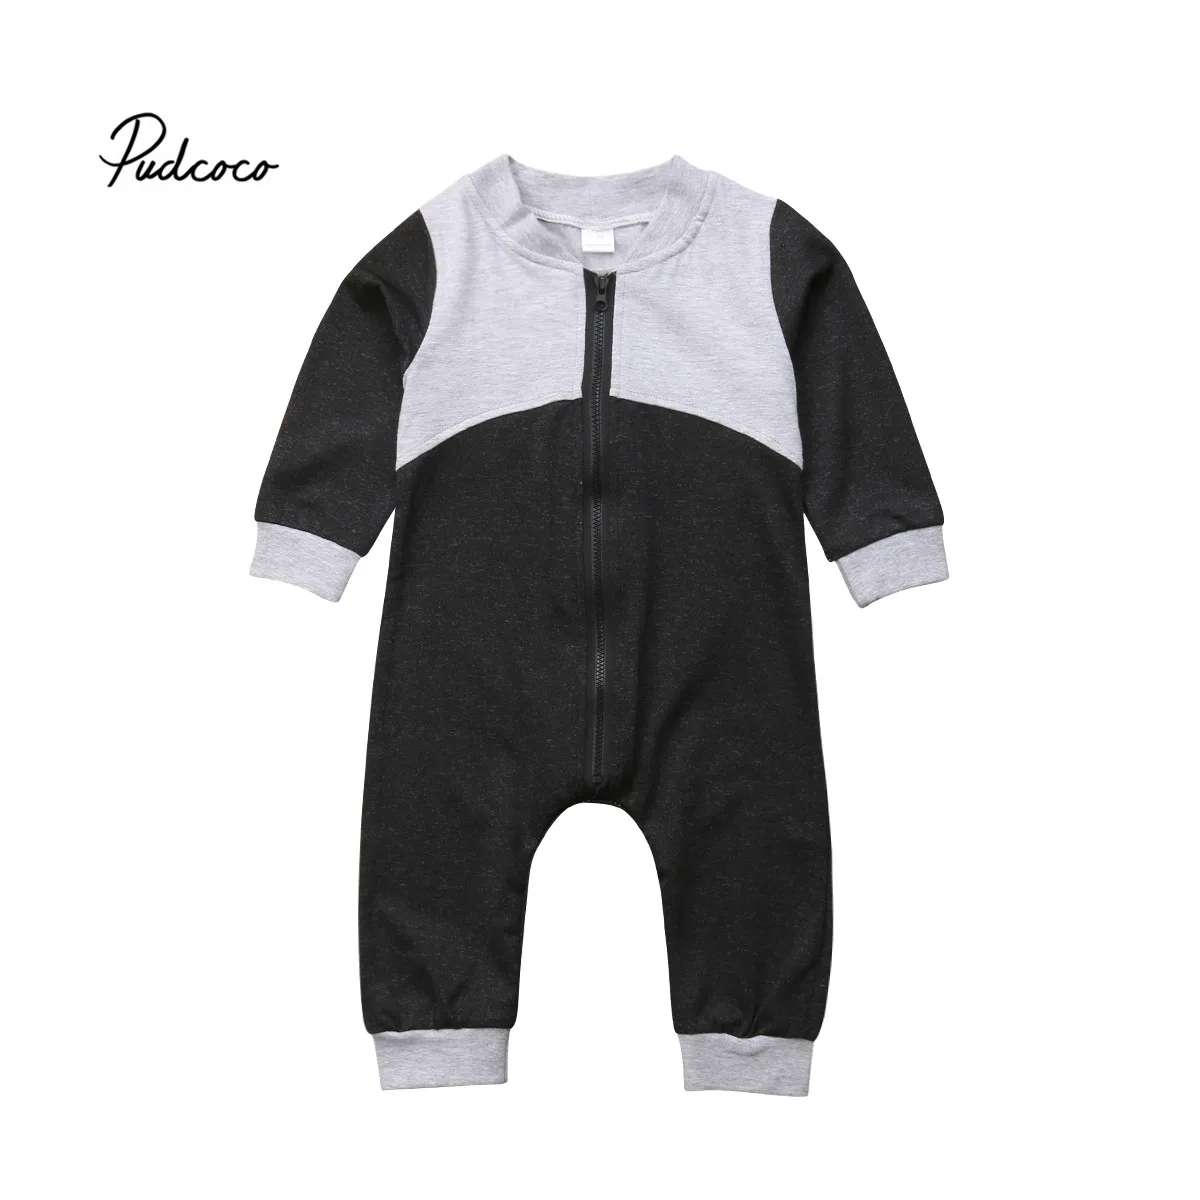 Pudcoco Casual Newborn Baby Infant Boy Cotton Patchwork Romper Jumpsuit Outfits Long Sleeve Clothes 0-24M | Мать и